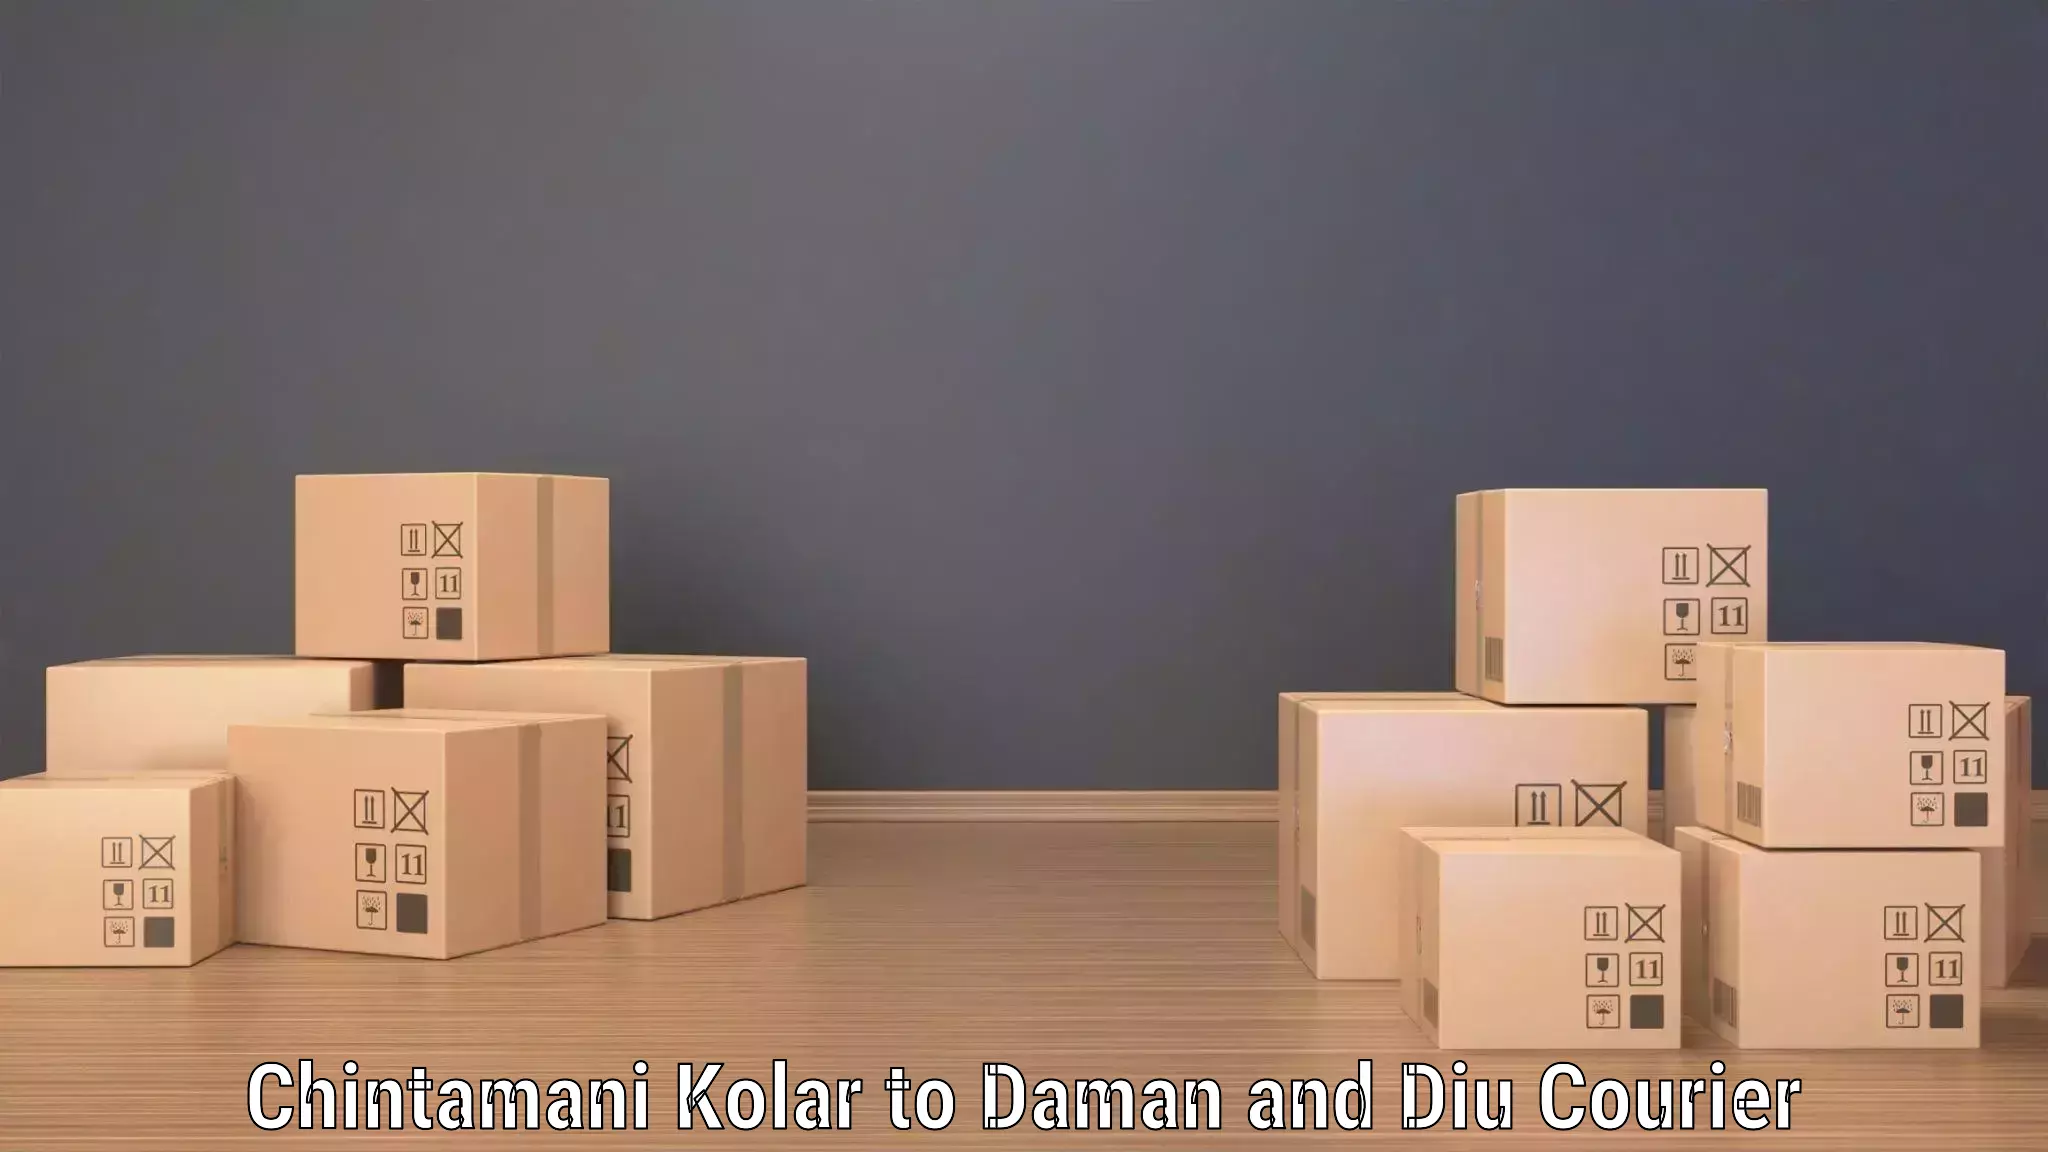 Express delivery capabilities Chintamani Kolar to Daman and Diu